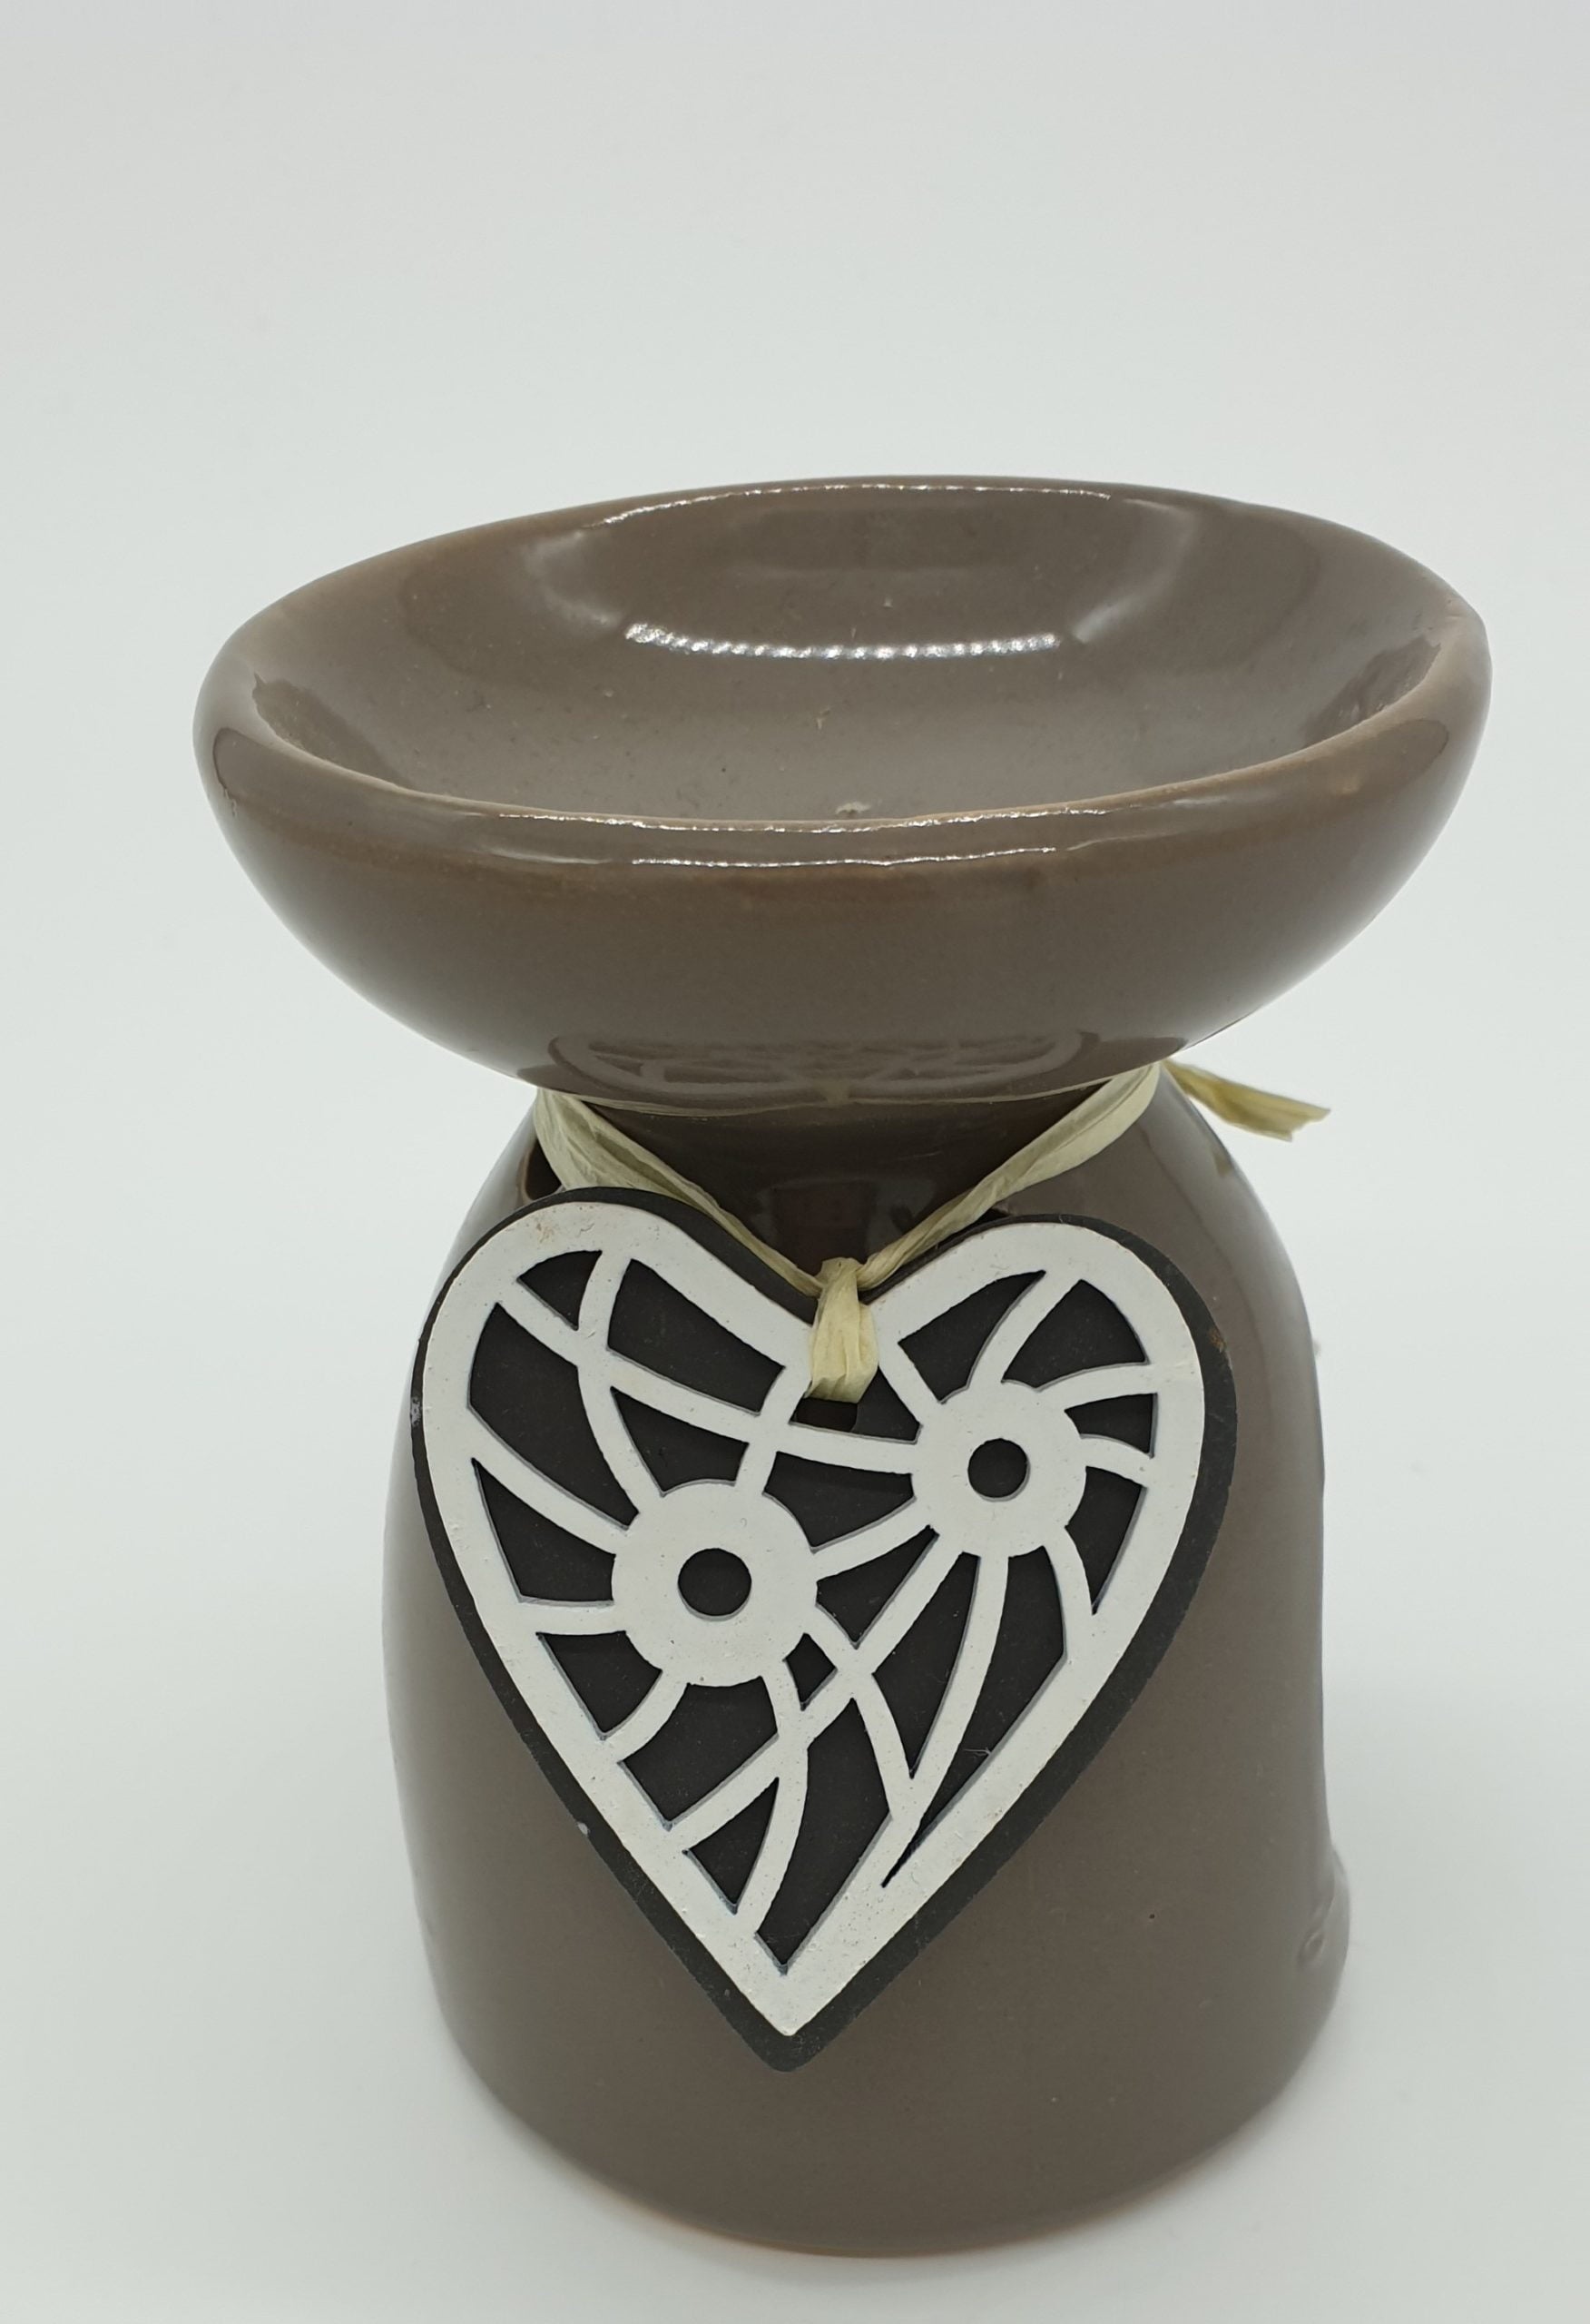 Eden Ceramic Oil Burner - Grey, Heart Design